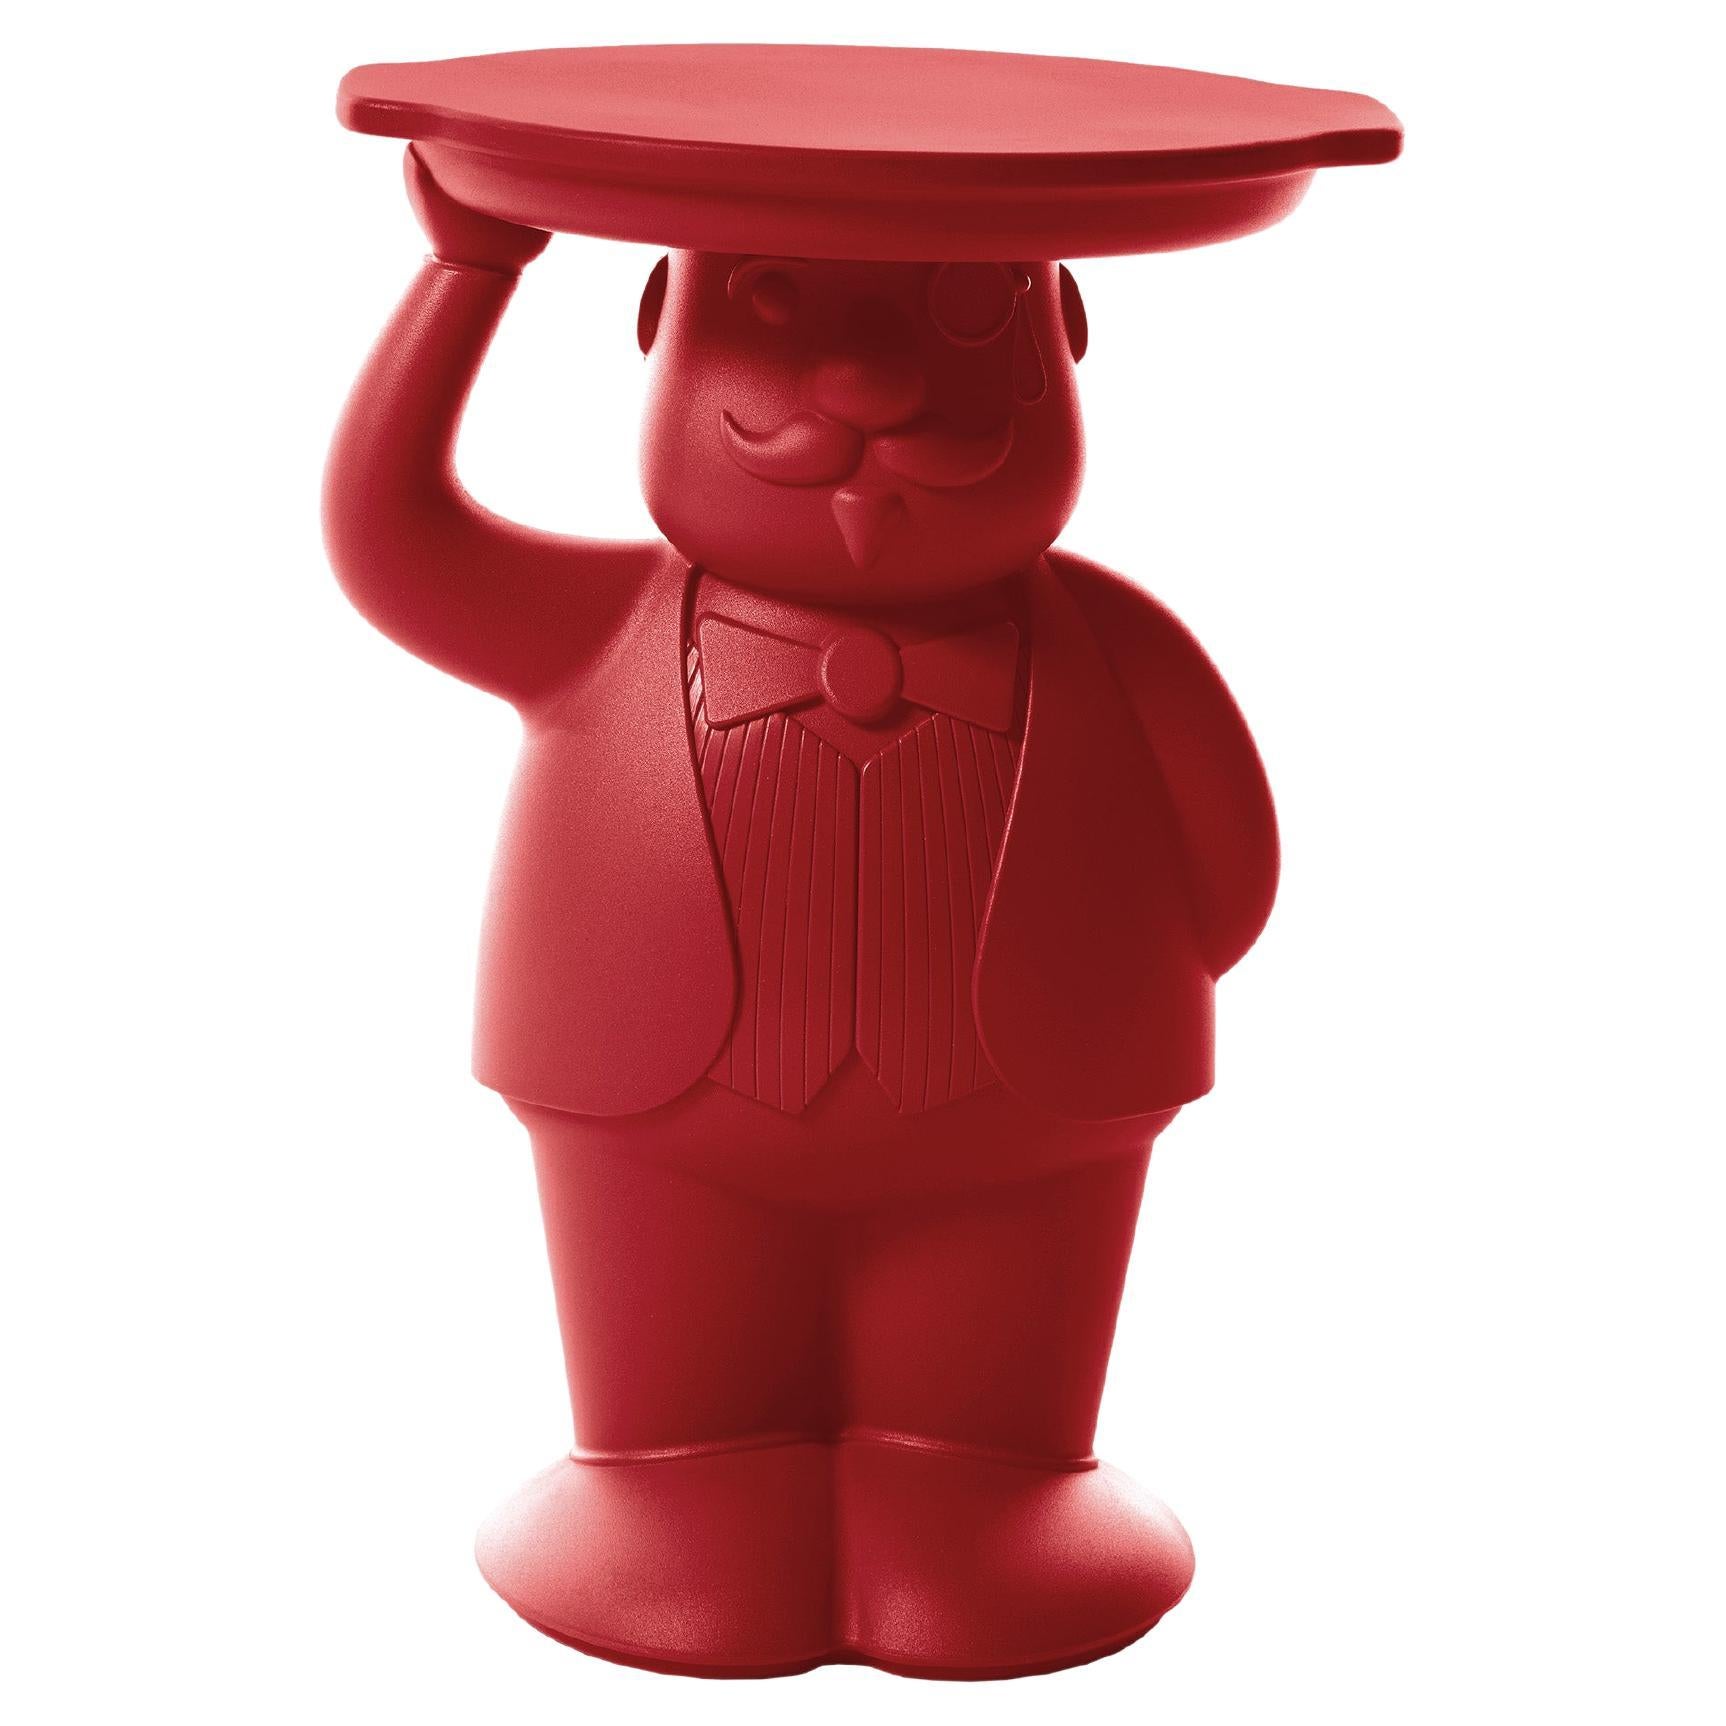 Slide Design Ambrogio Servant Table in Flame Red by Favaretto & Partners